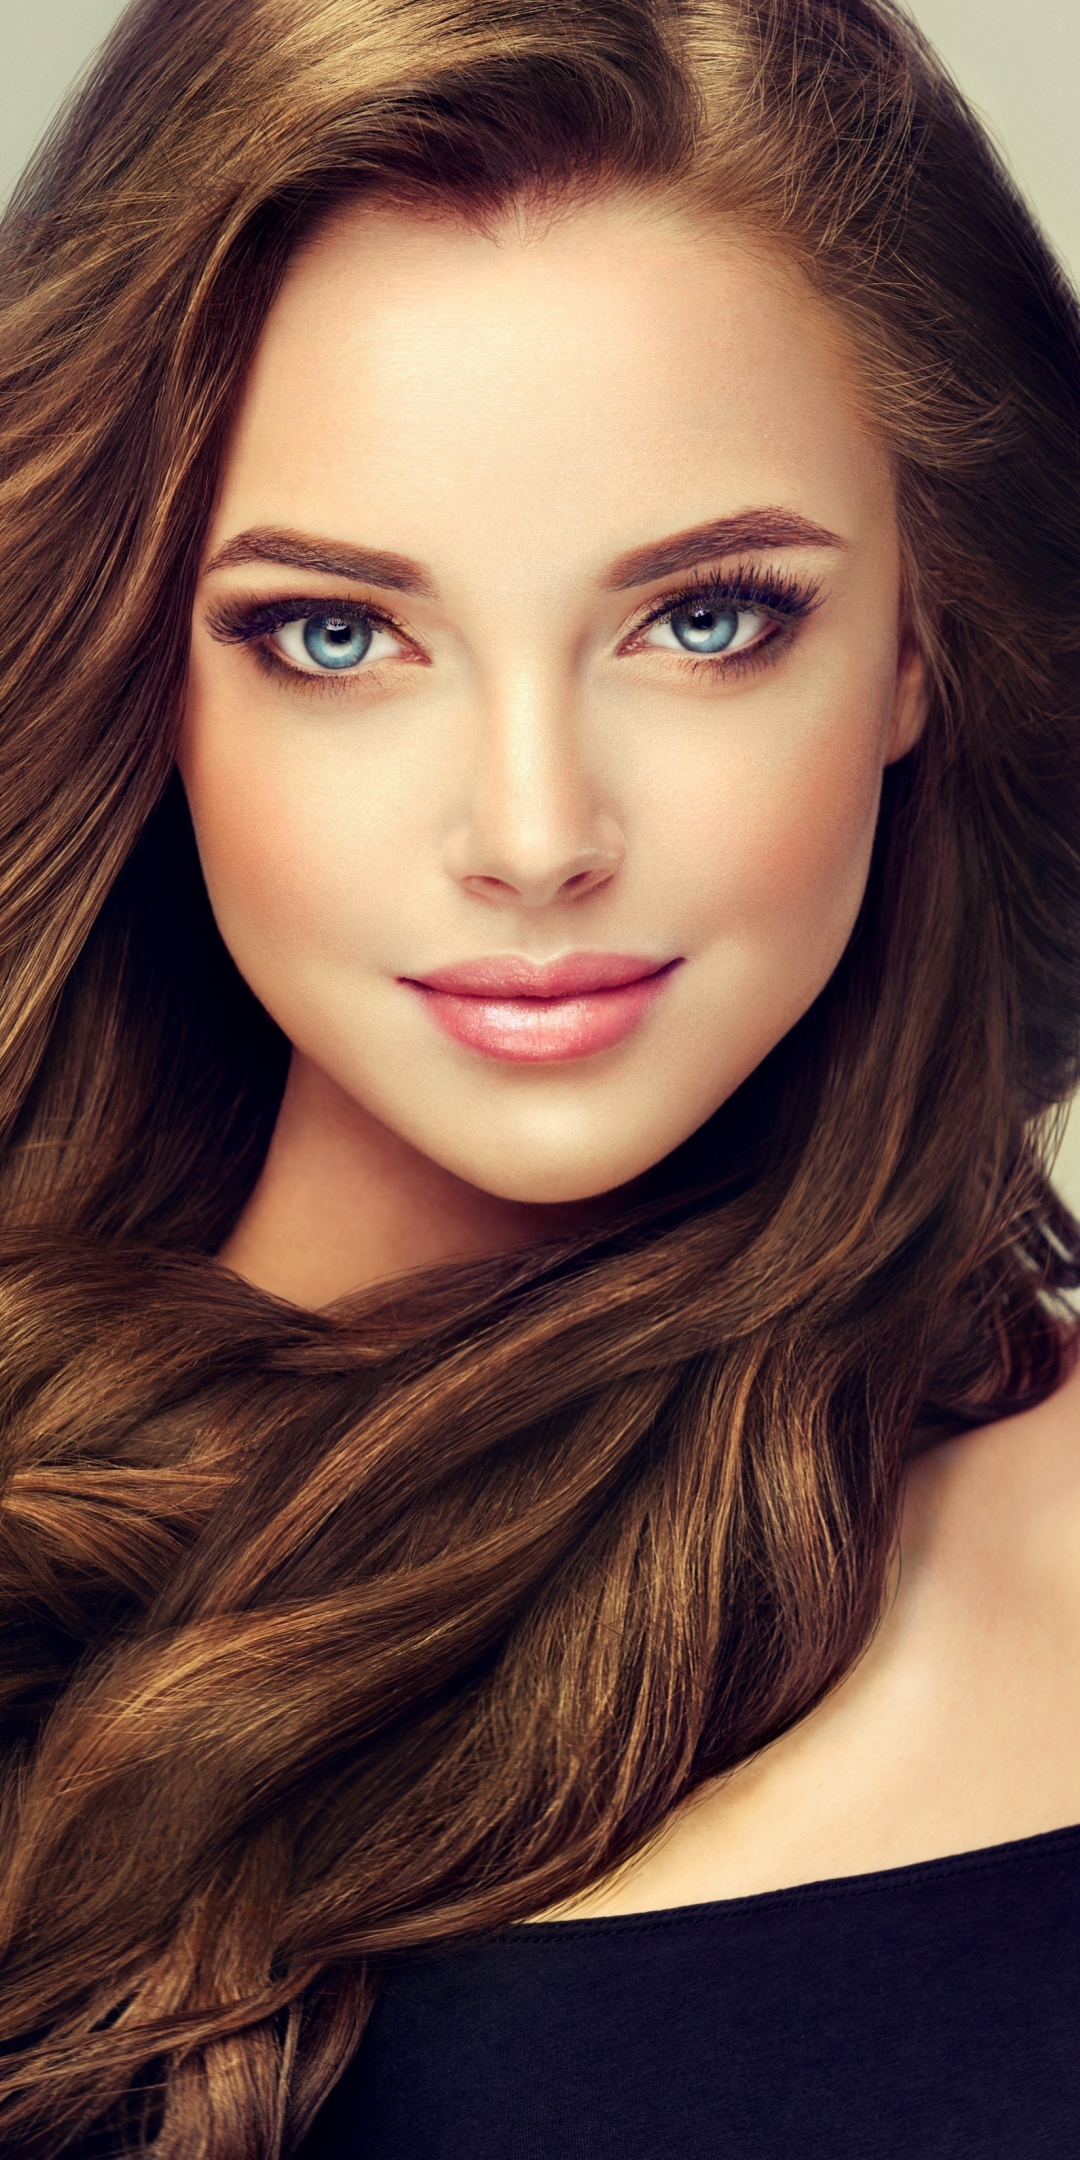 Download 1080x2160 Wallpaper Beautiful Girl Model Juicy Lips Images, Photos, Reviews